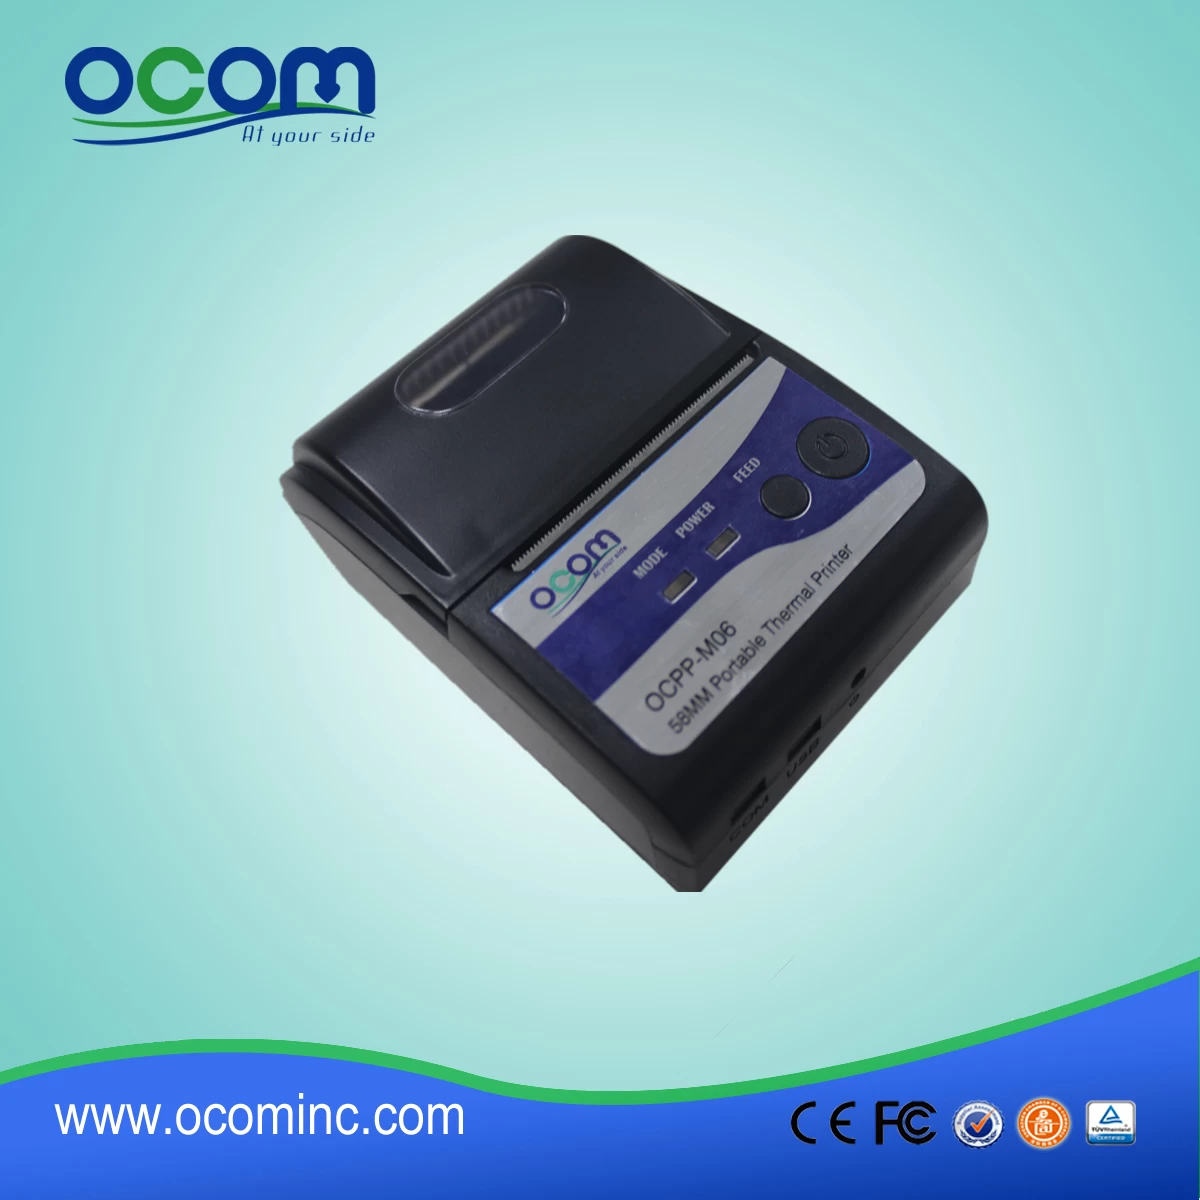 (OCPP-M06)China factory OCOM 58mm thermal  printer, thermal  printer cheap